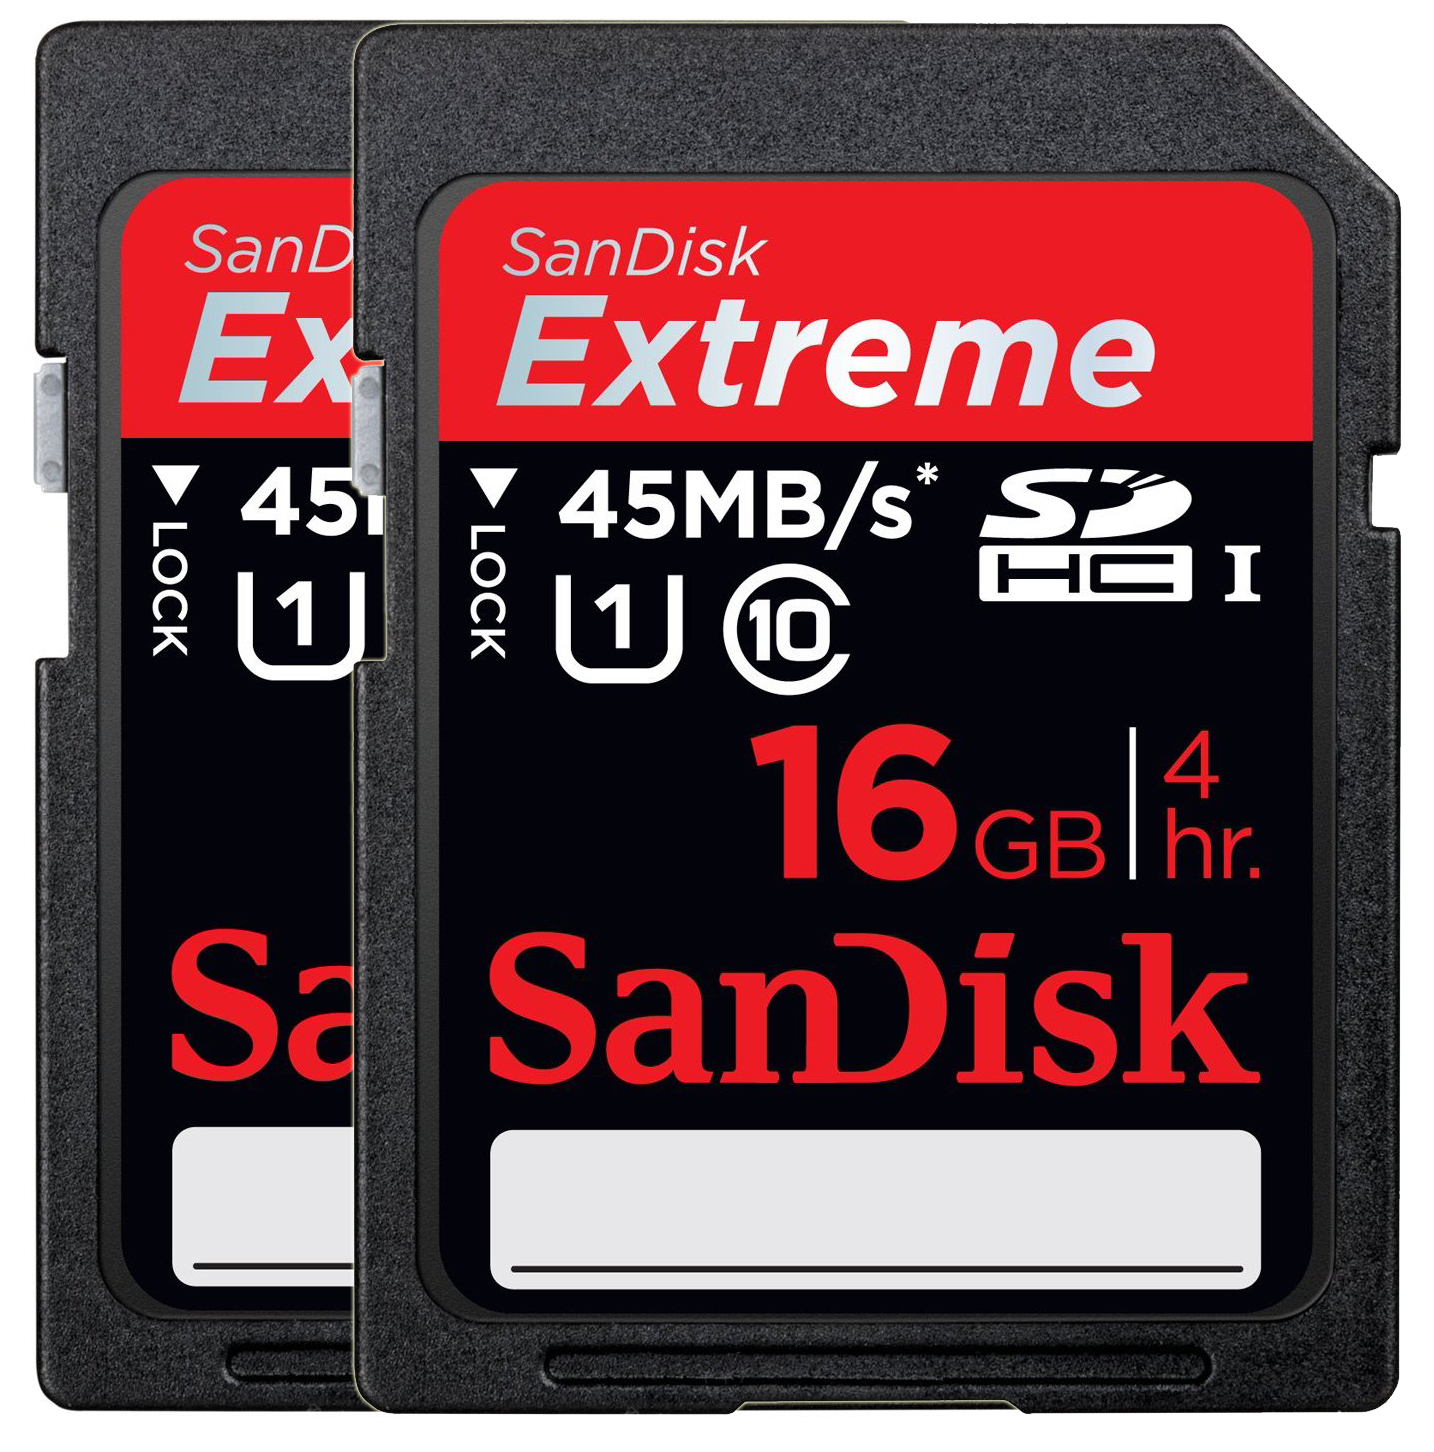 Extreme HD Video SDHC Card 20MB/sec